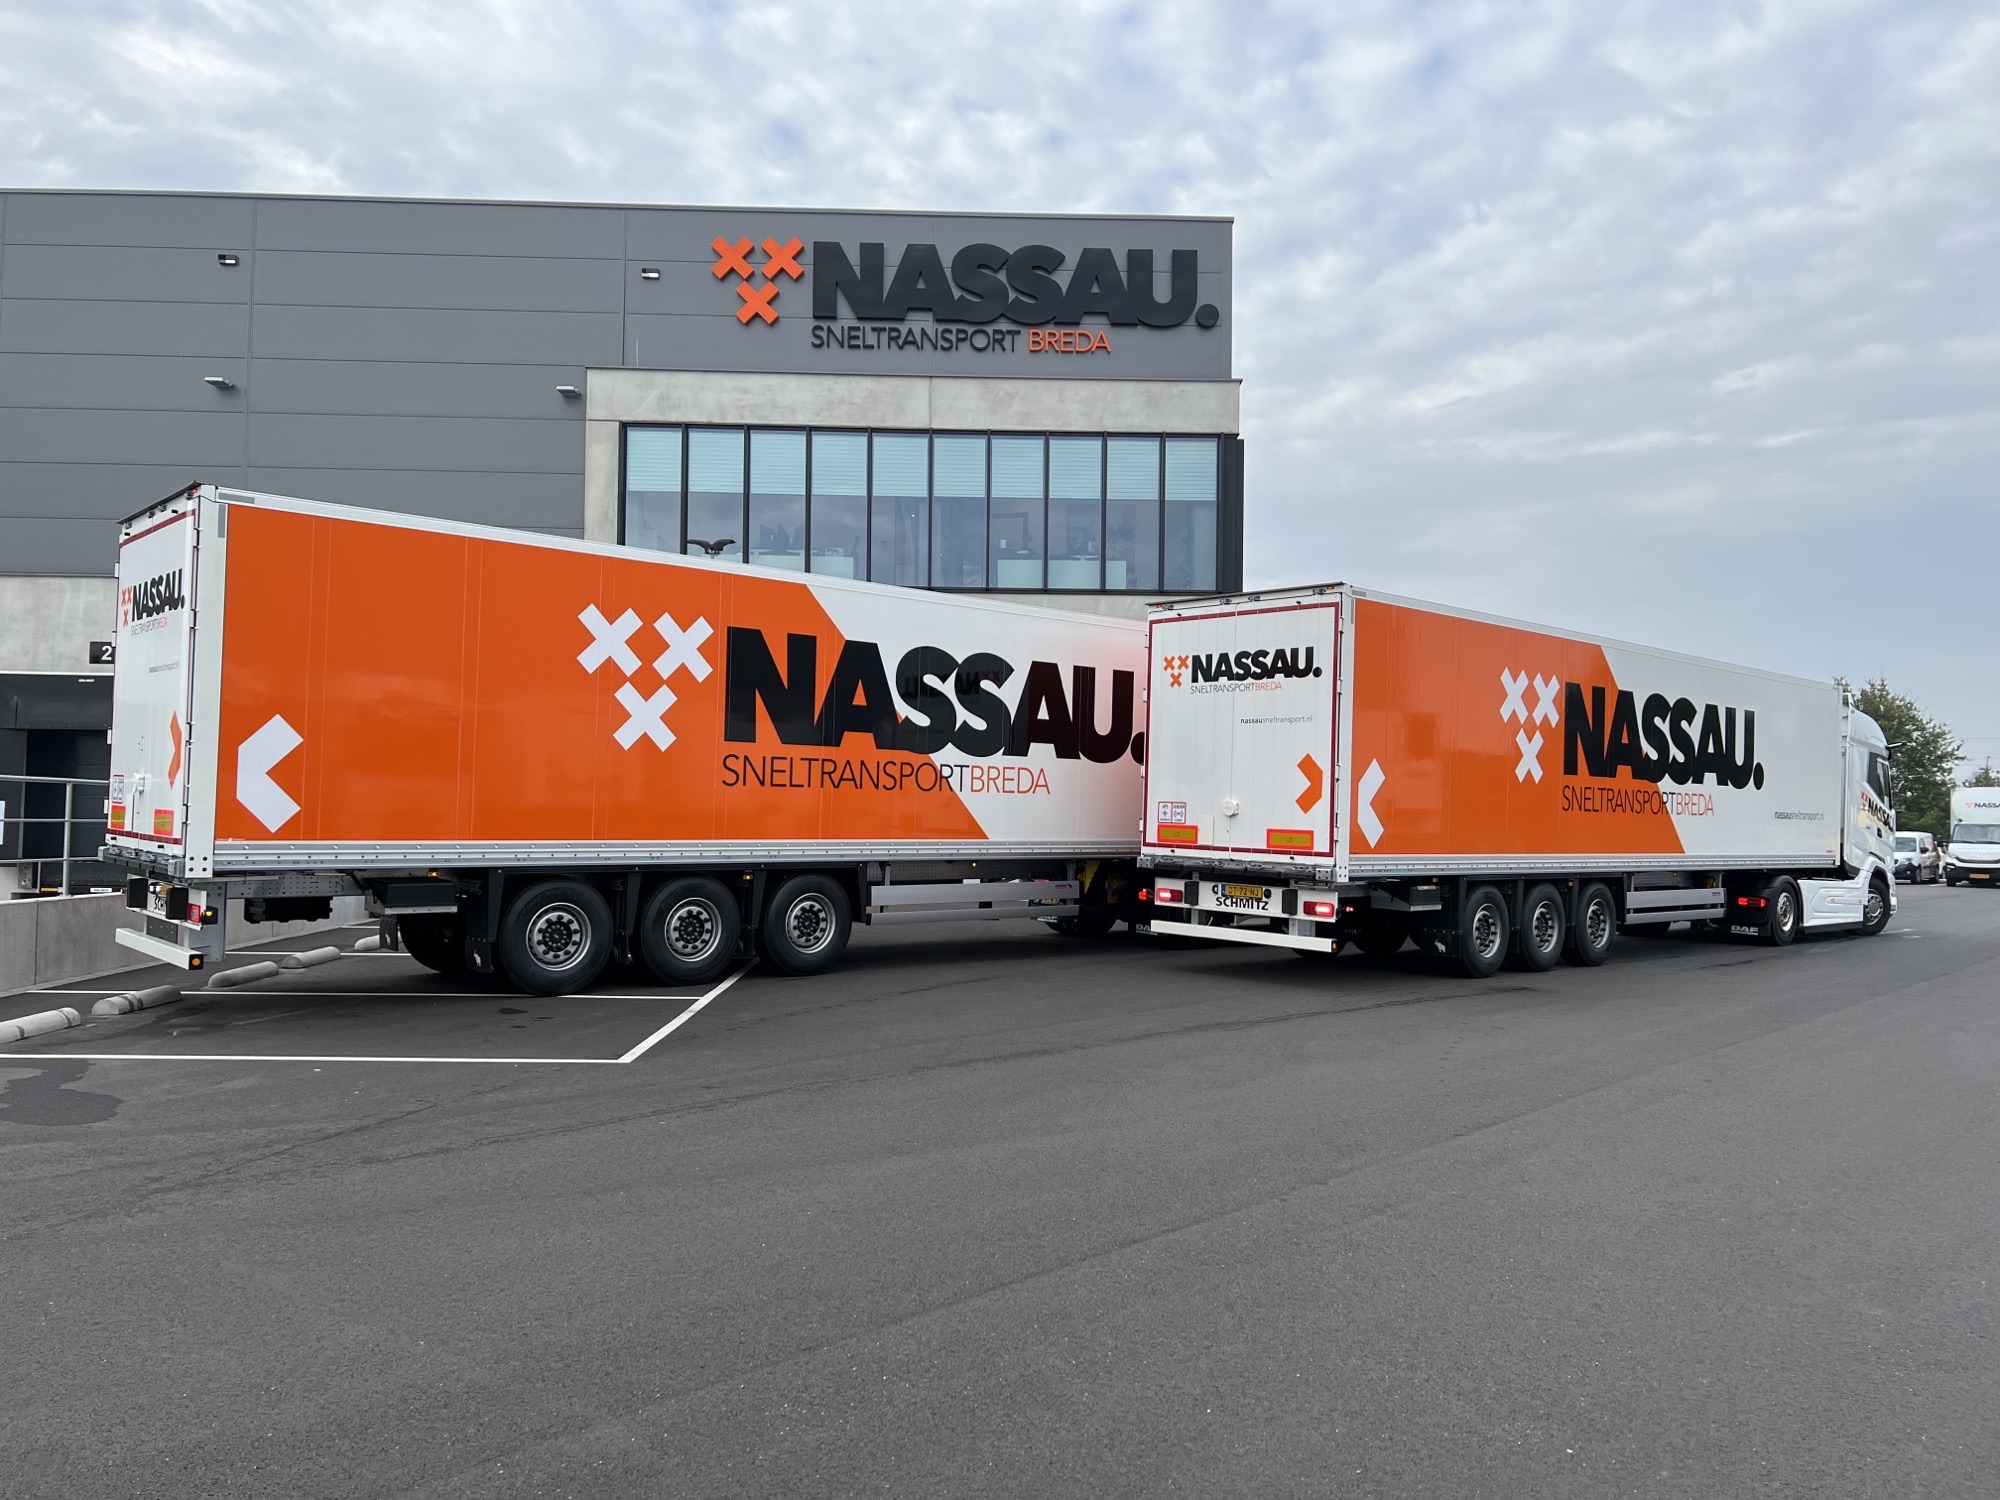 Twintigste Schmitz-trailer voor Nassau Sneltransport